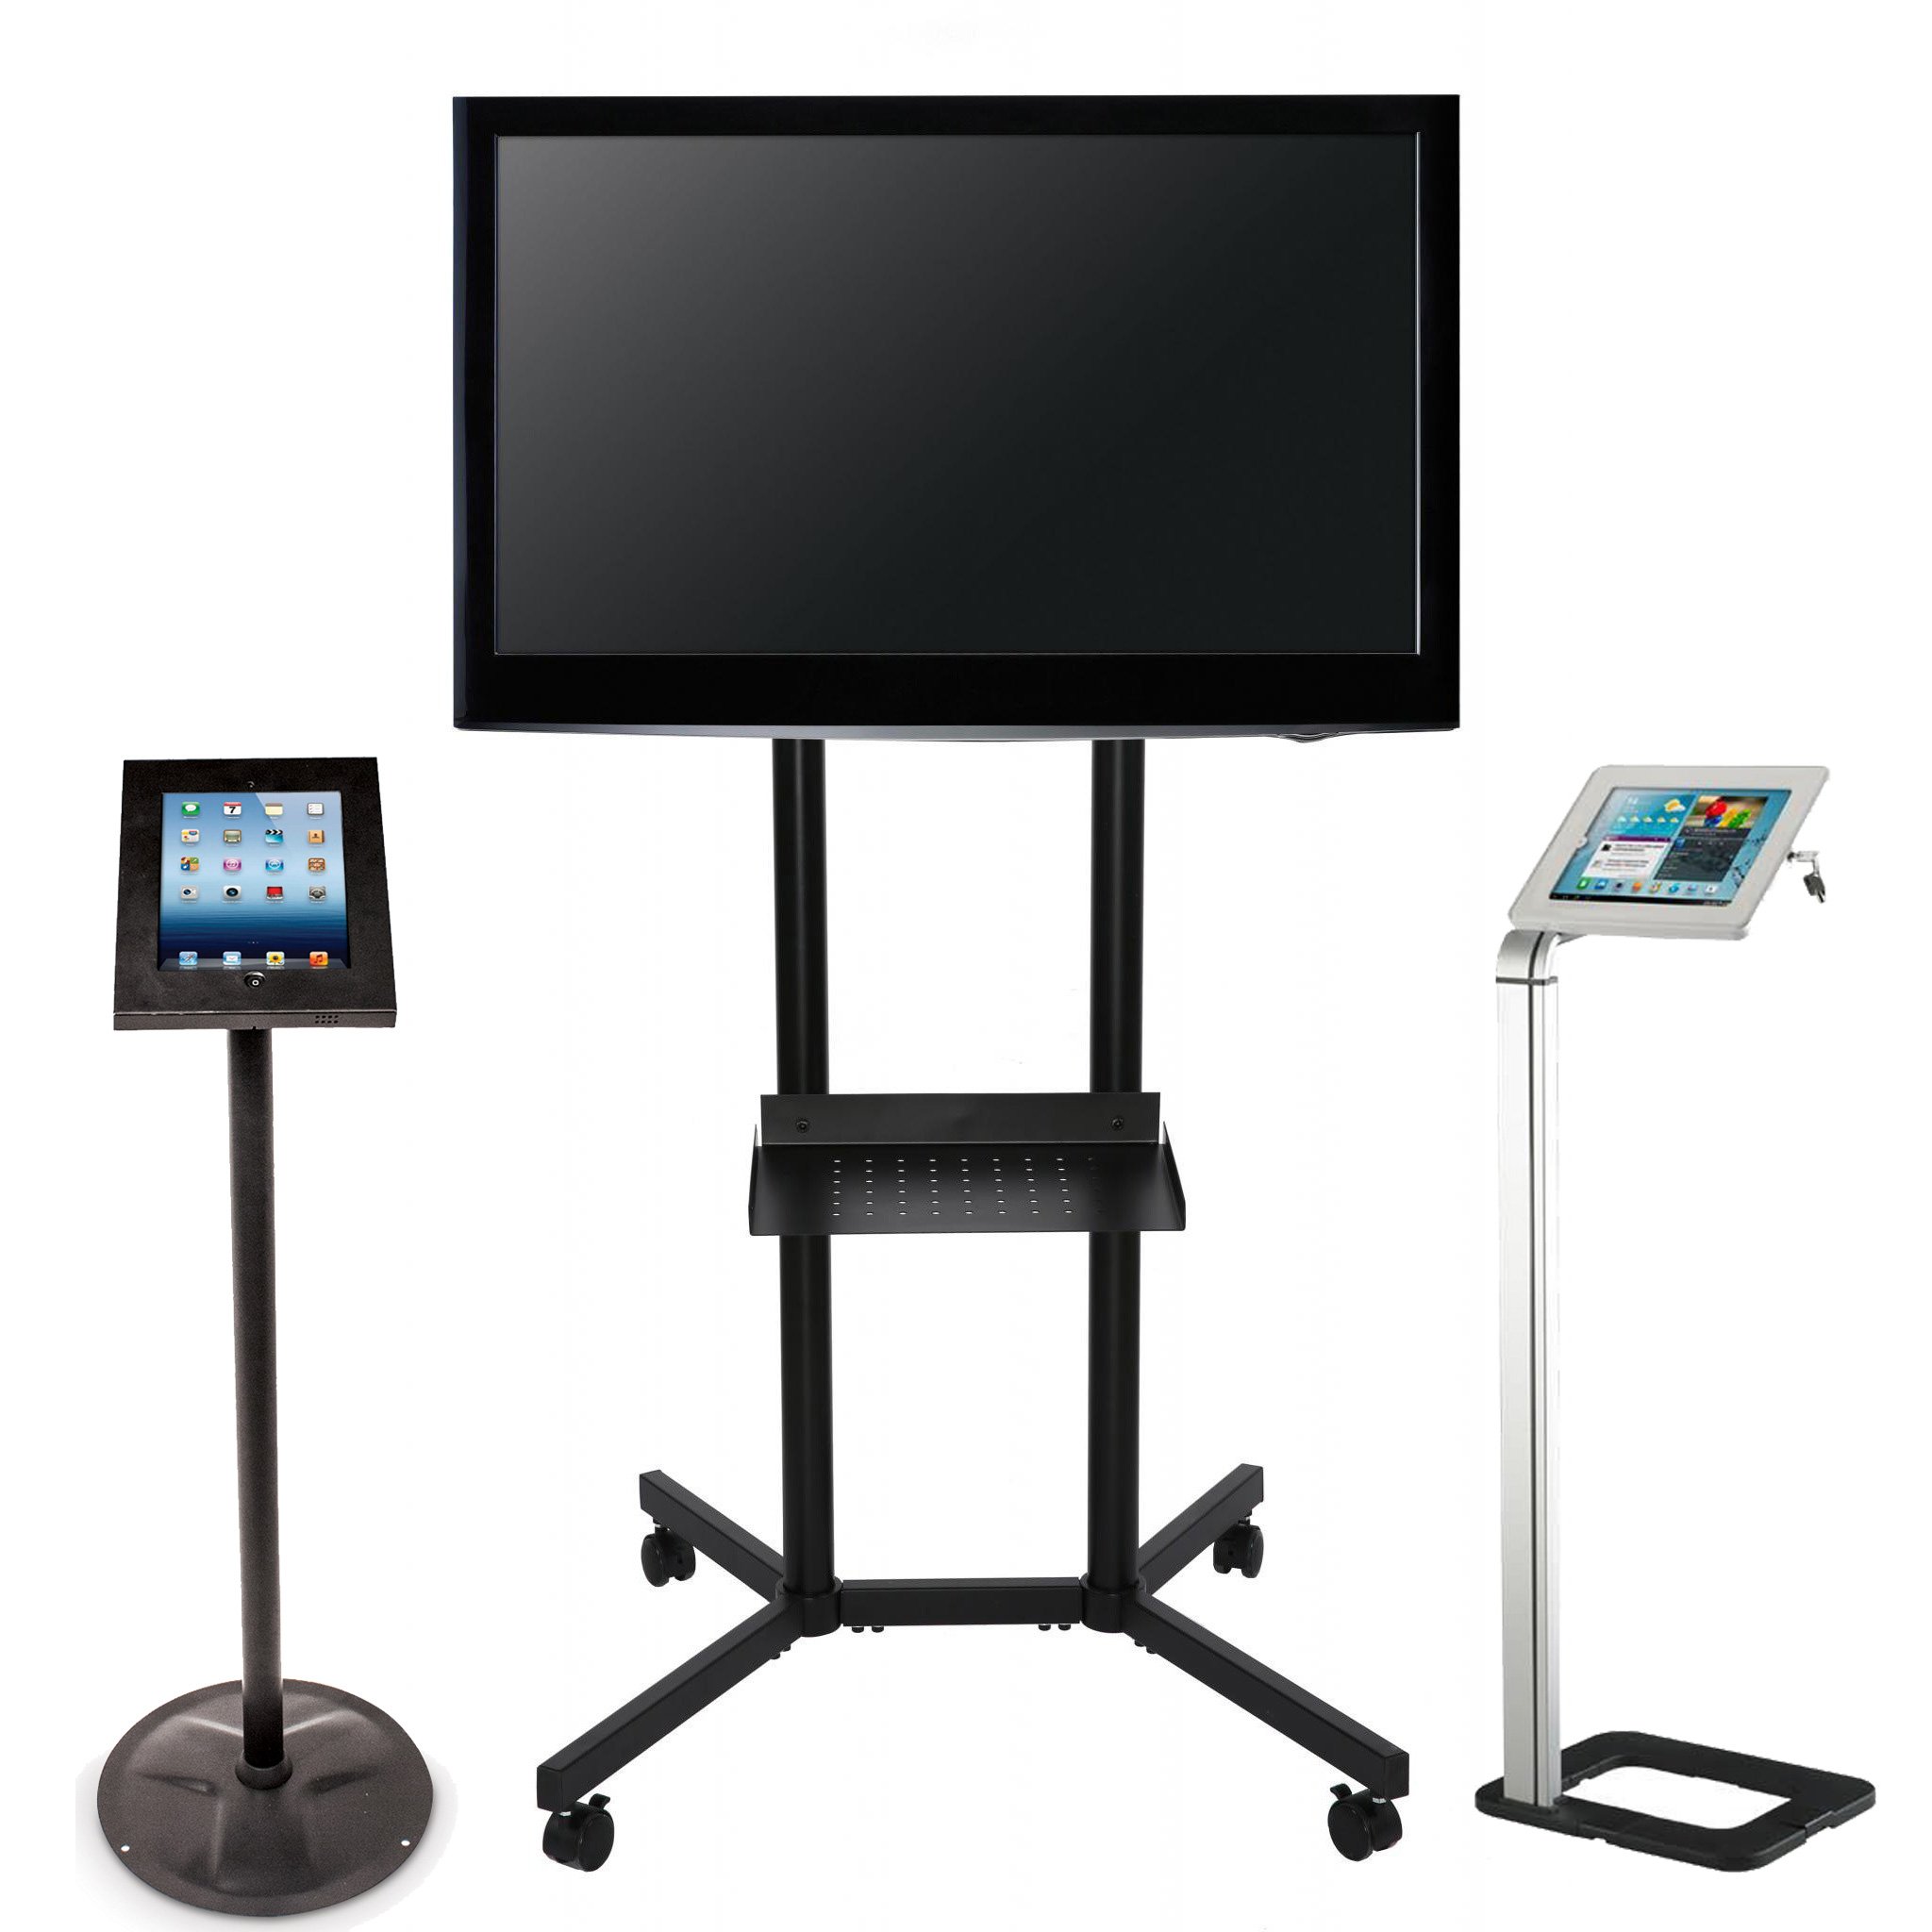 Trade iPad & TV stands